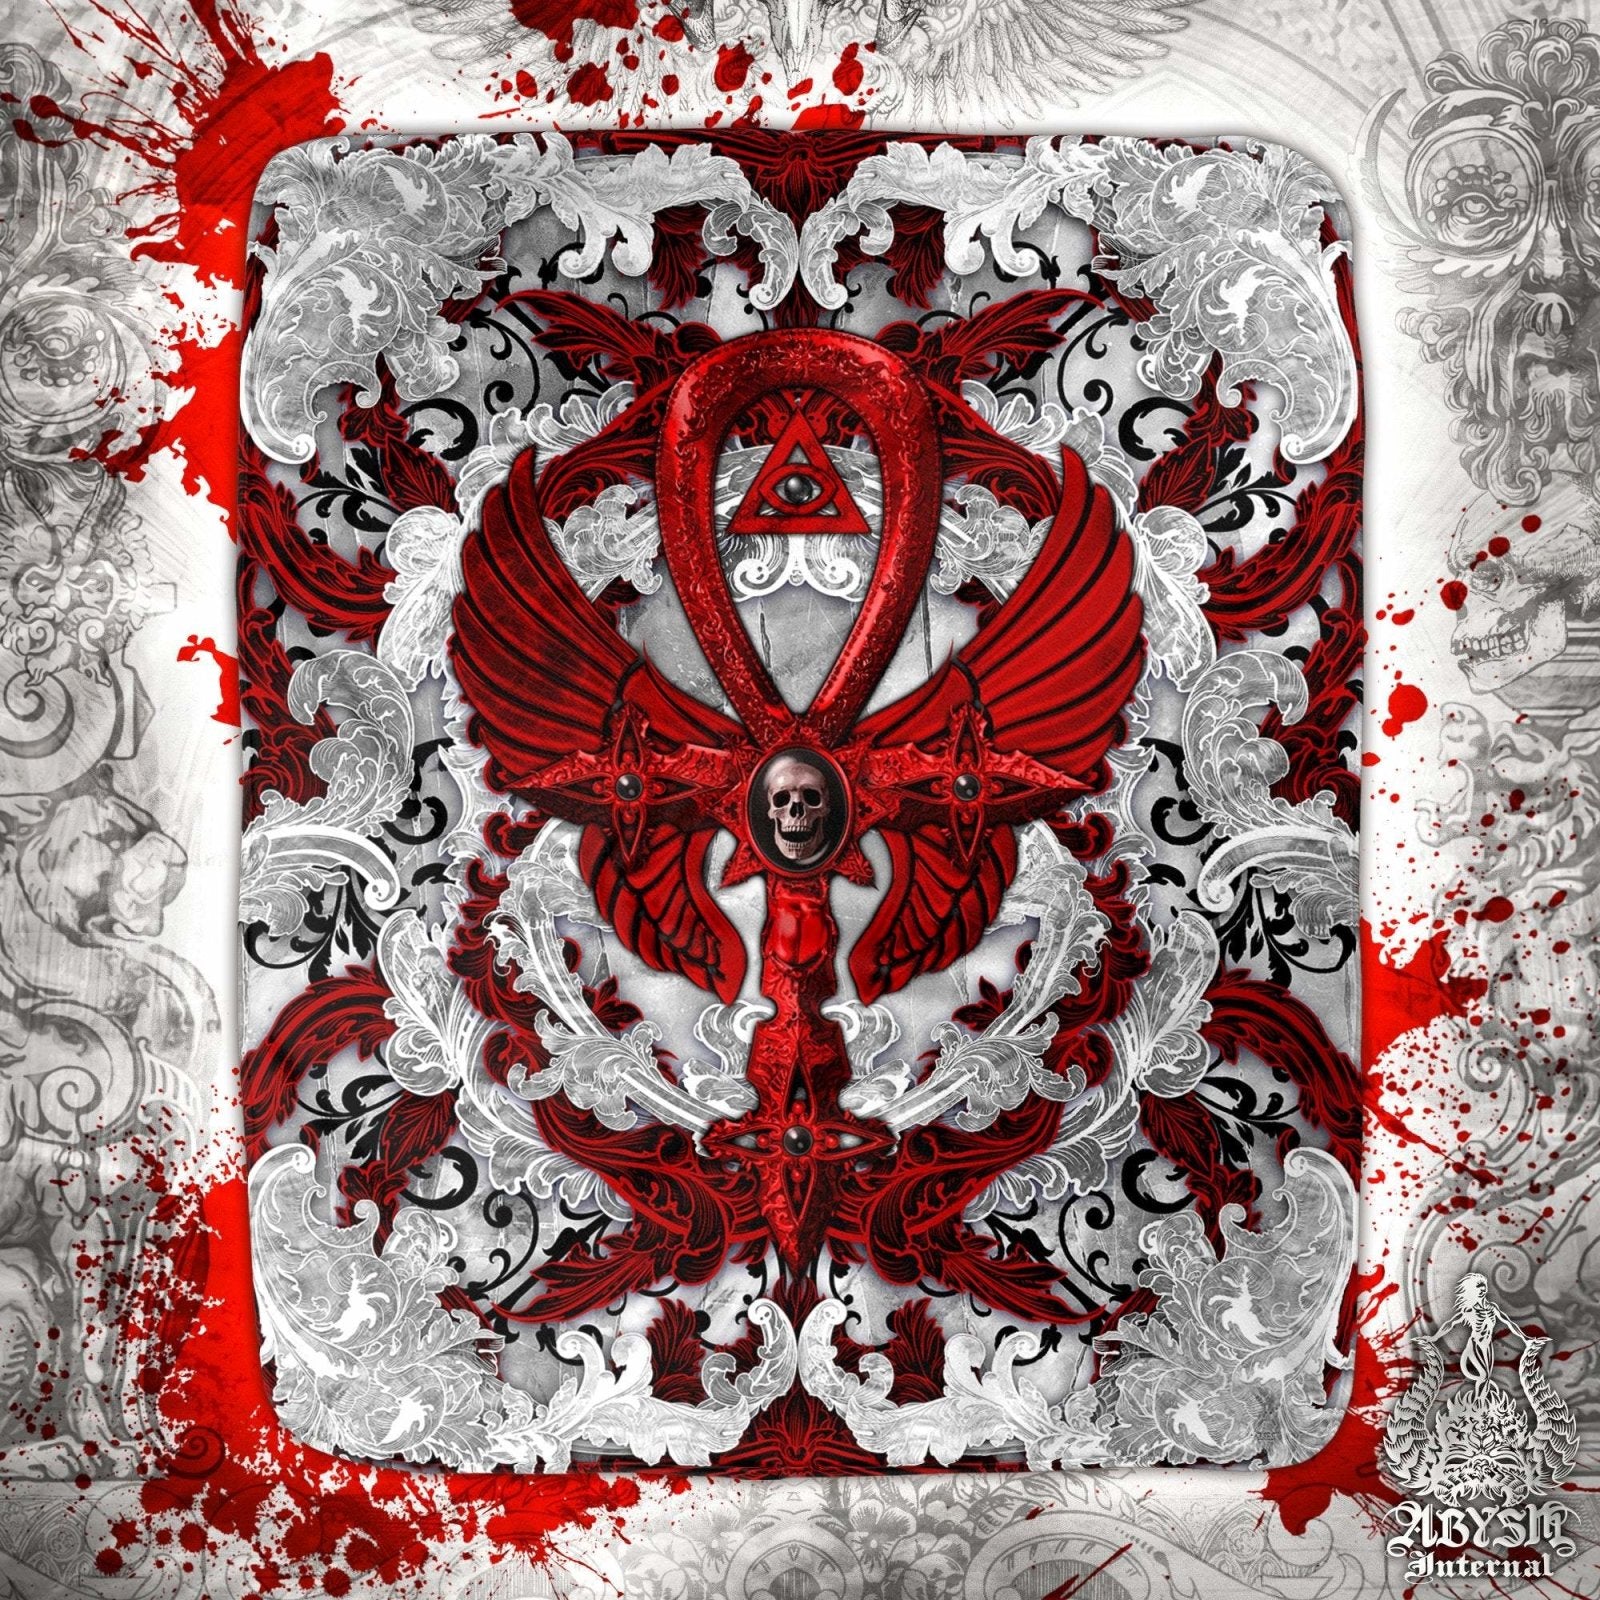 Gothic Throw Fleece Blanket, Goth Decor - Ankh Cross, Bloody Red - Abysm Internal